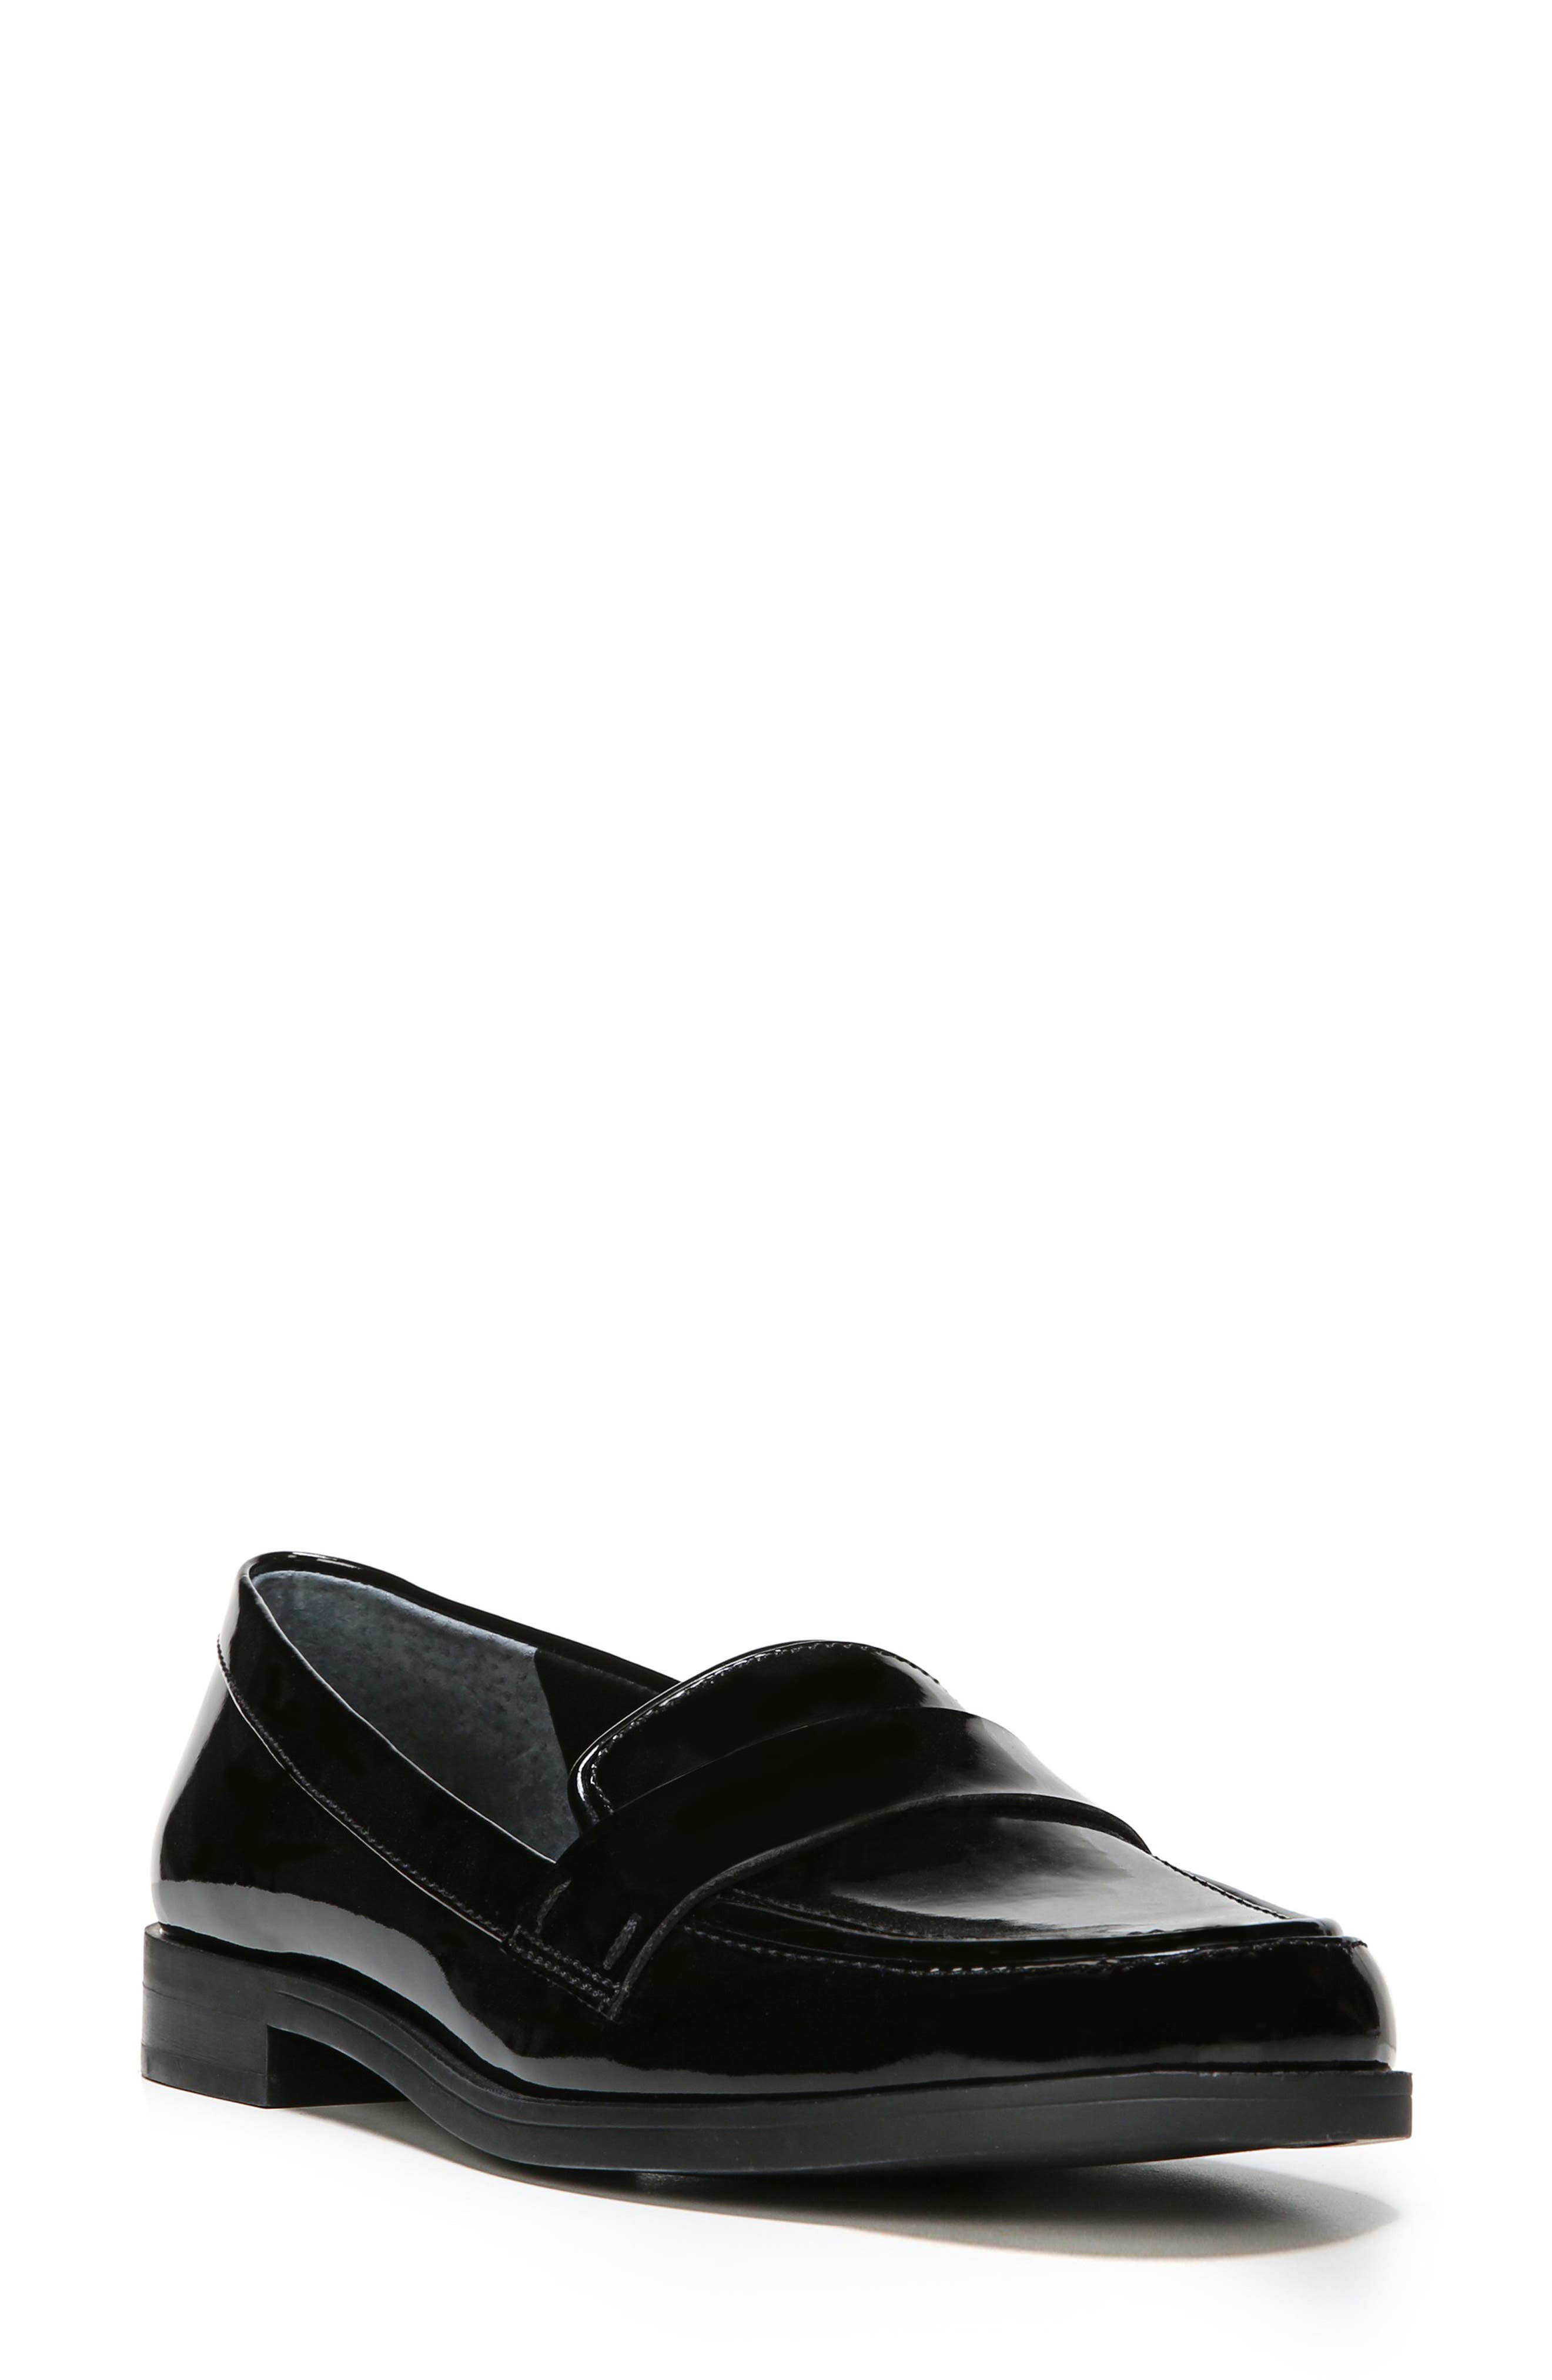 UPC 093638671513 product image for Women's Franco Sarto Valera Loafer, Size 5.5 M - Black | upcitemdb.com